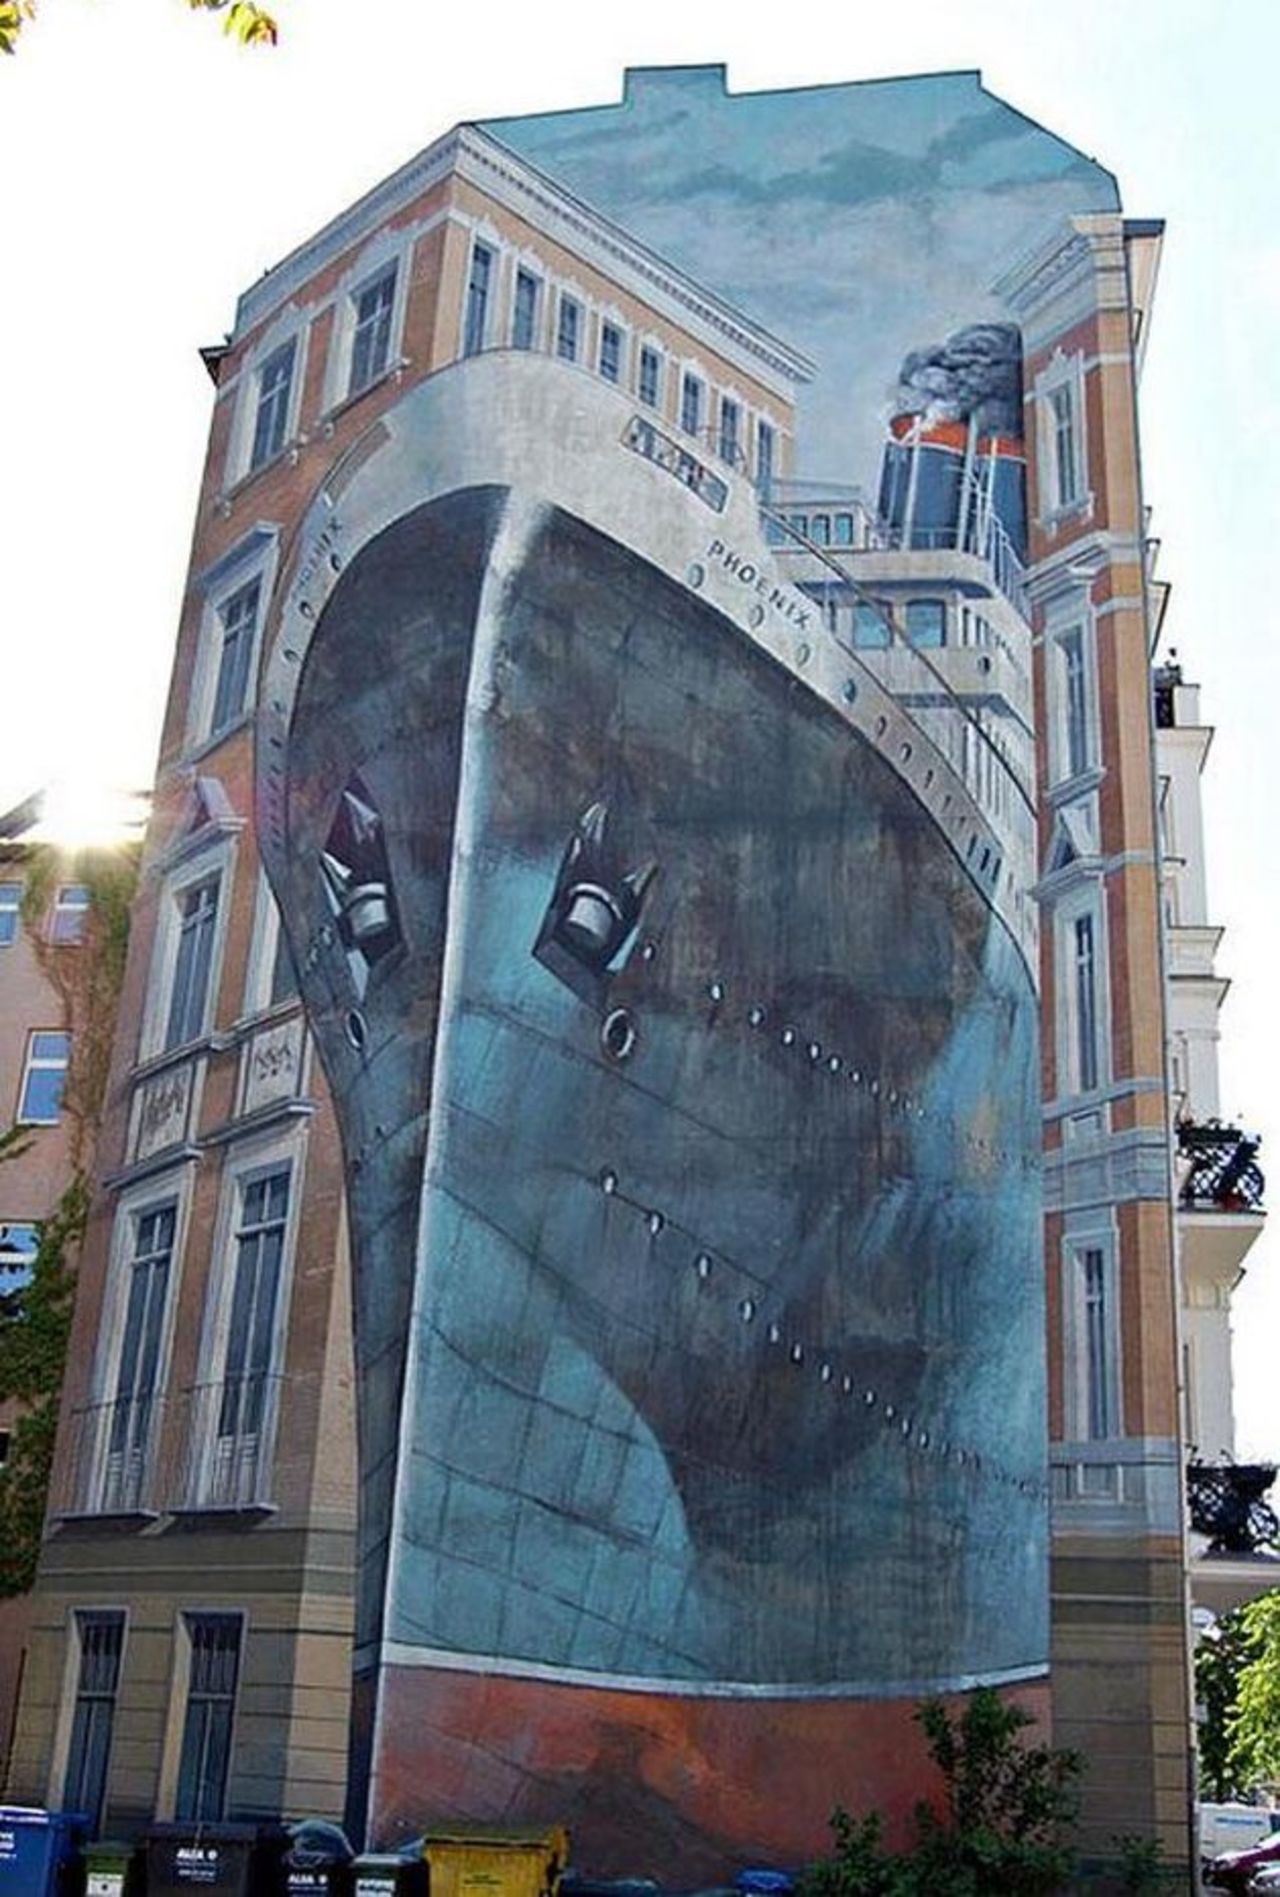 #StreetArtSaturday will feature some amazing #3D #Streetart such as this "Phoenix" mural by Gert Neuhaus in Berlin. https://t.co/6wKQimMGkX